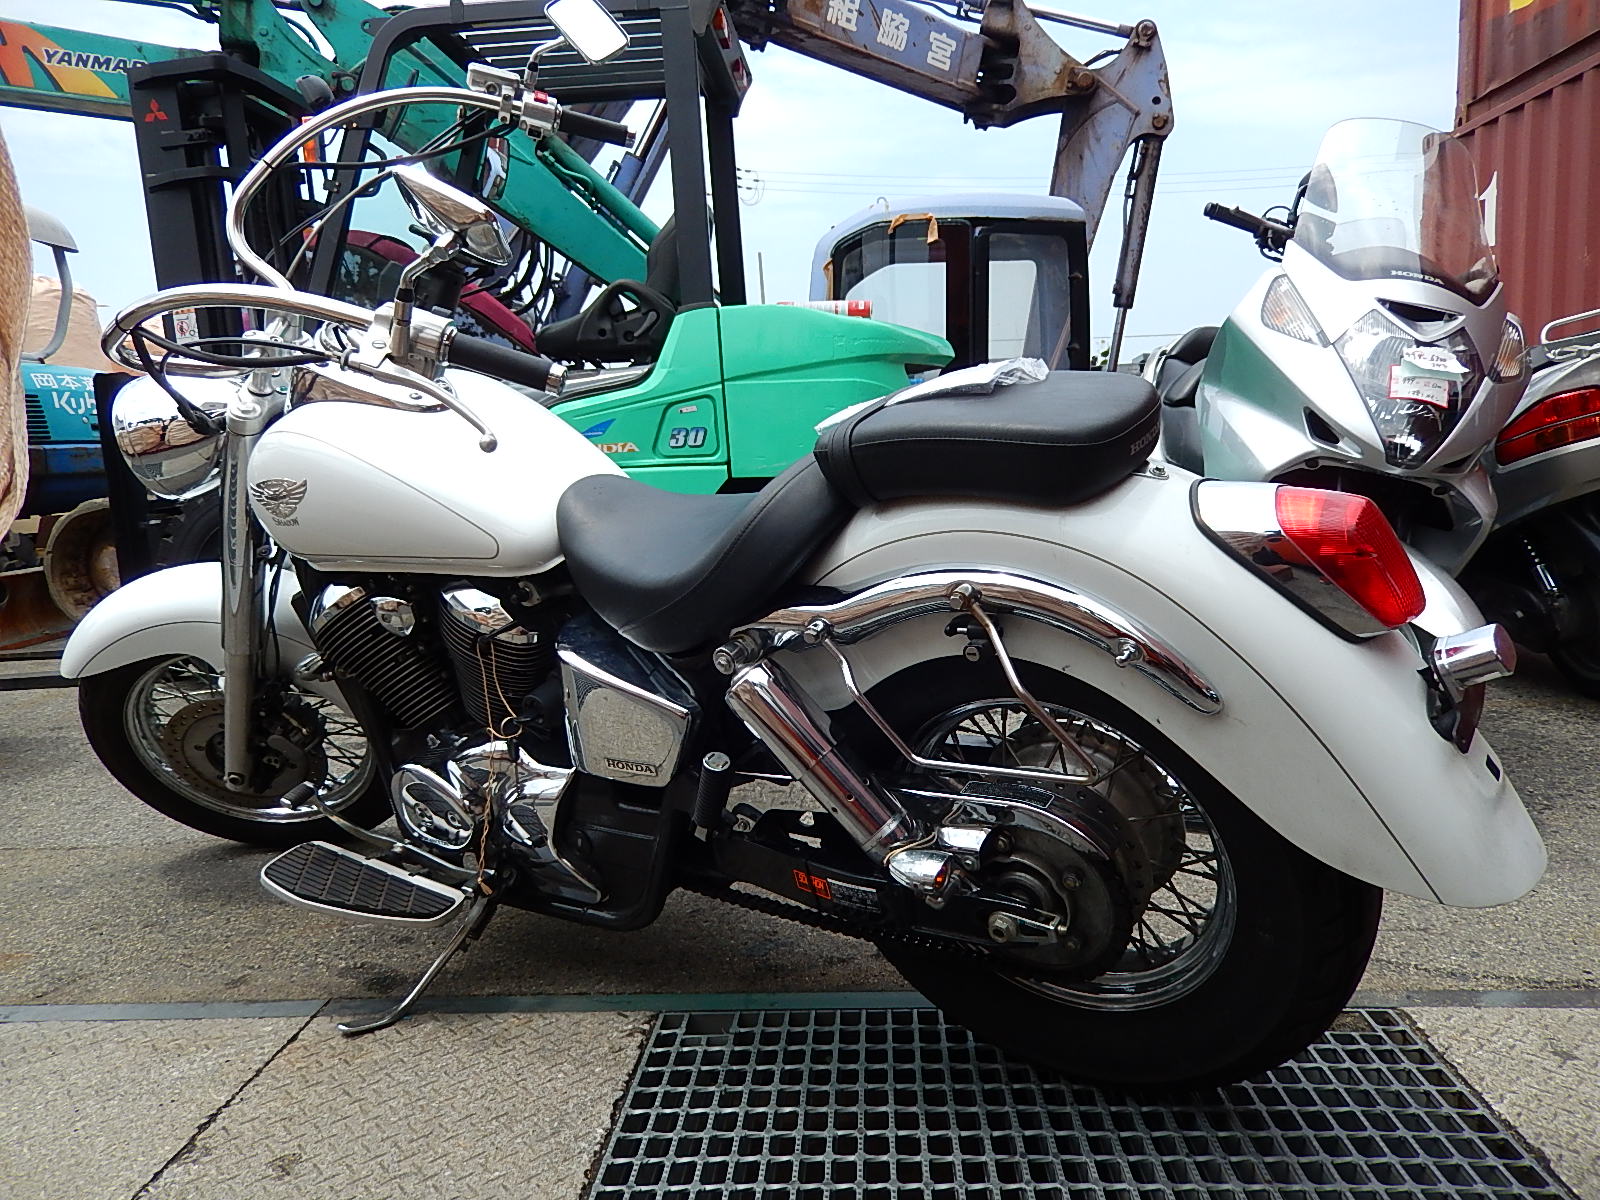 Обзор мотоцикла Honda Shadow 400